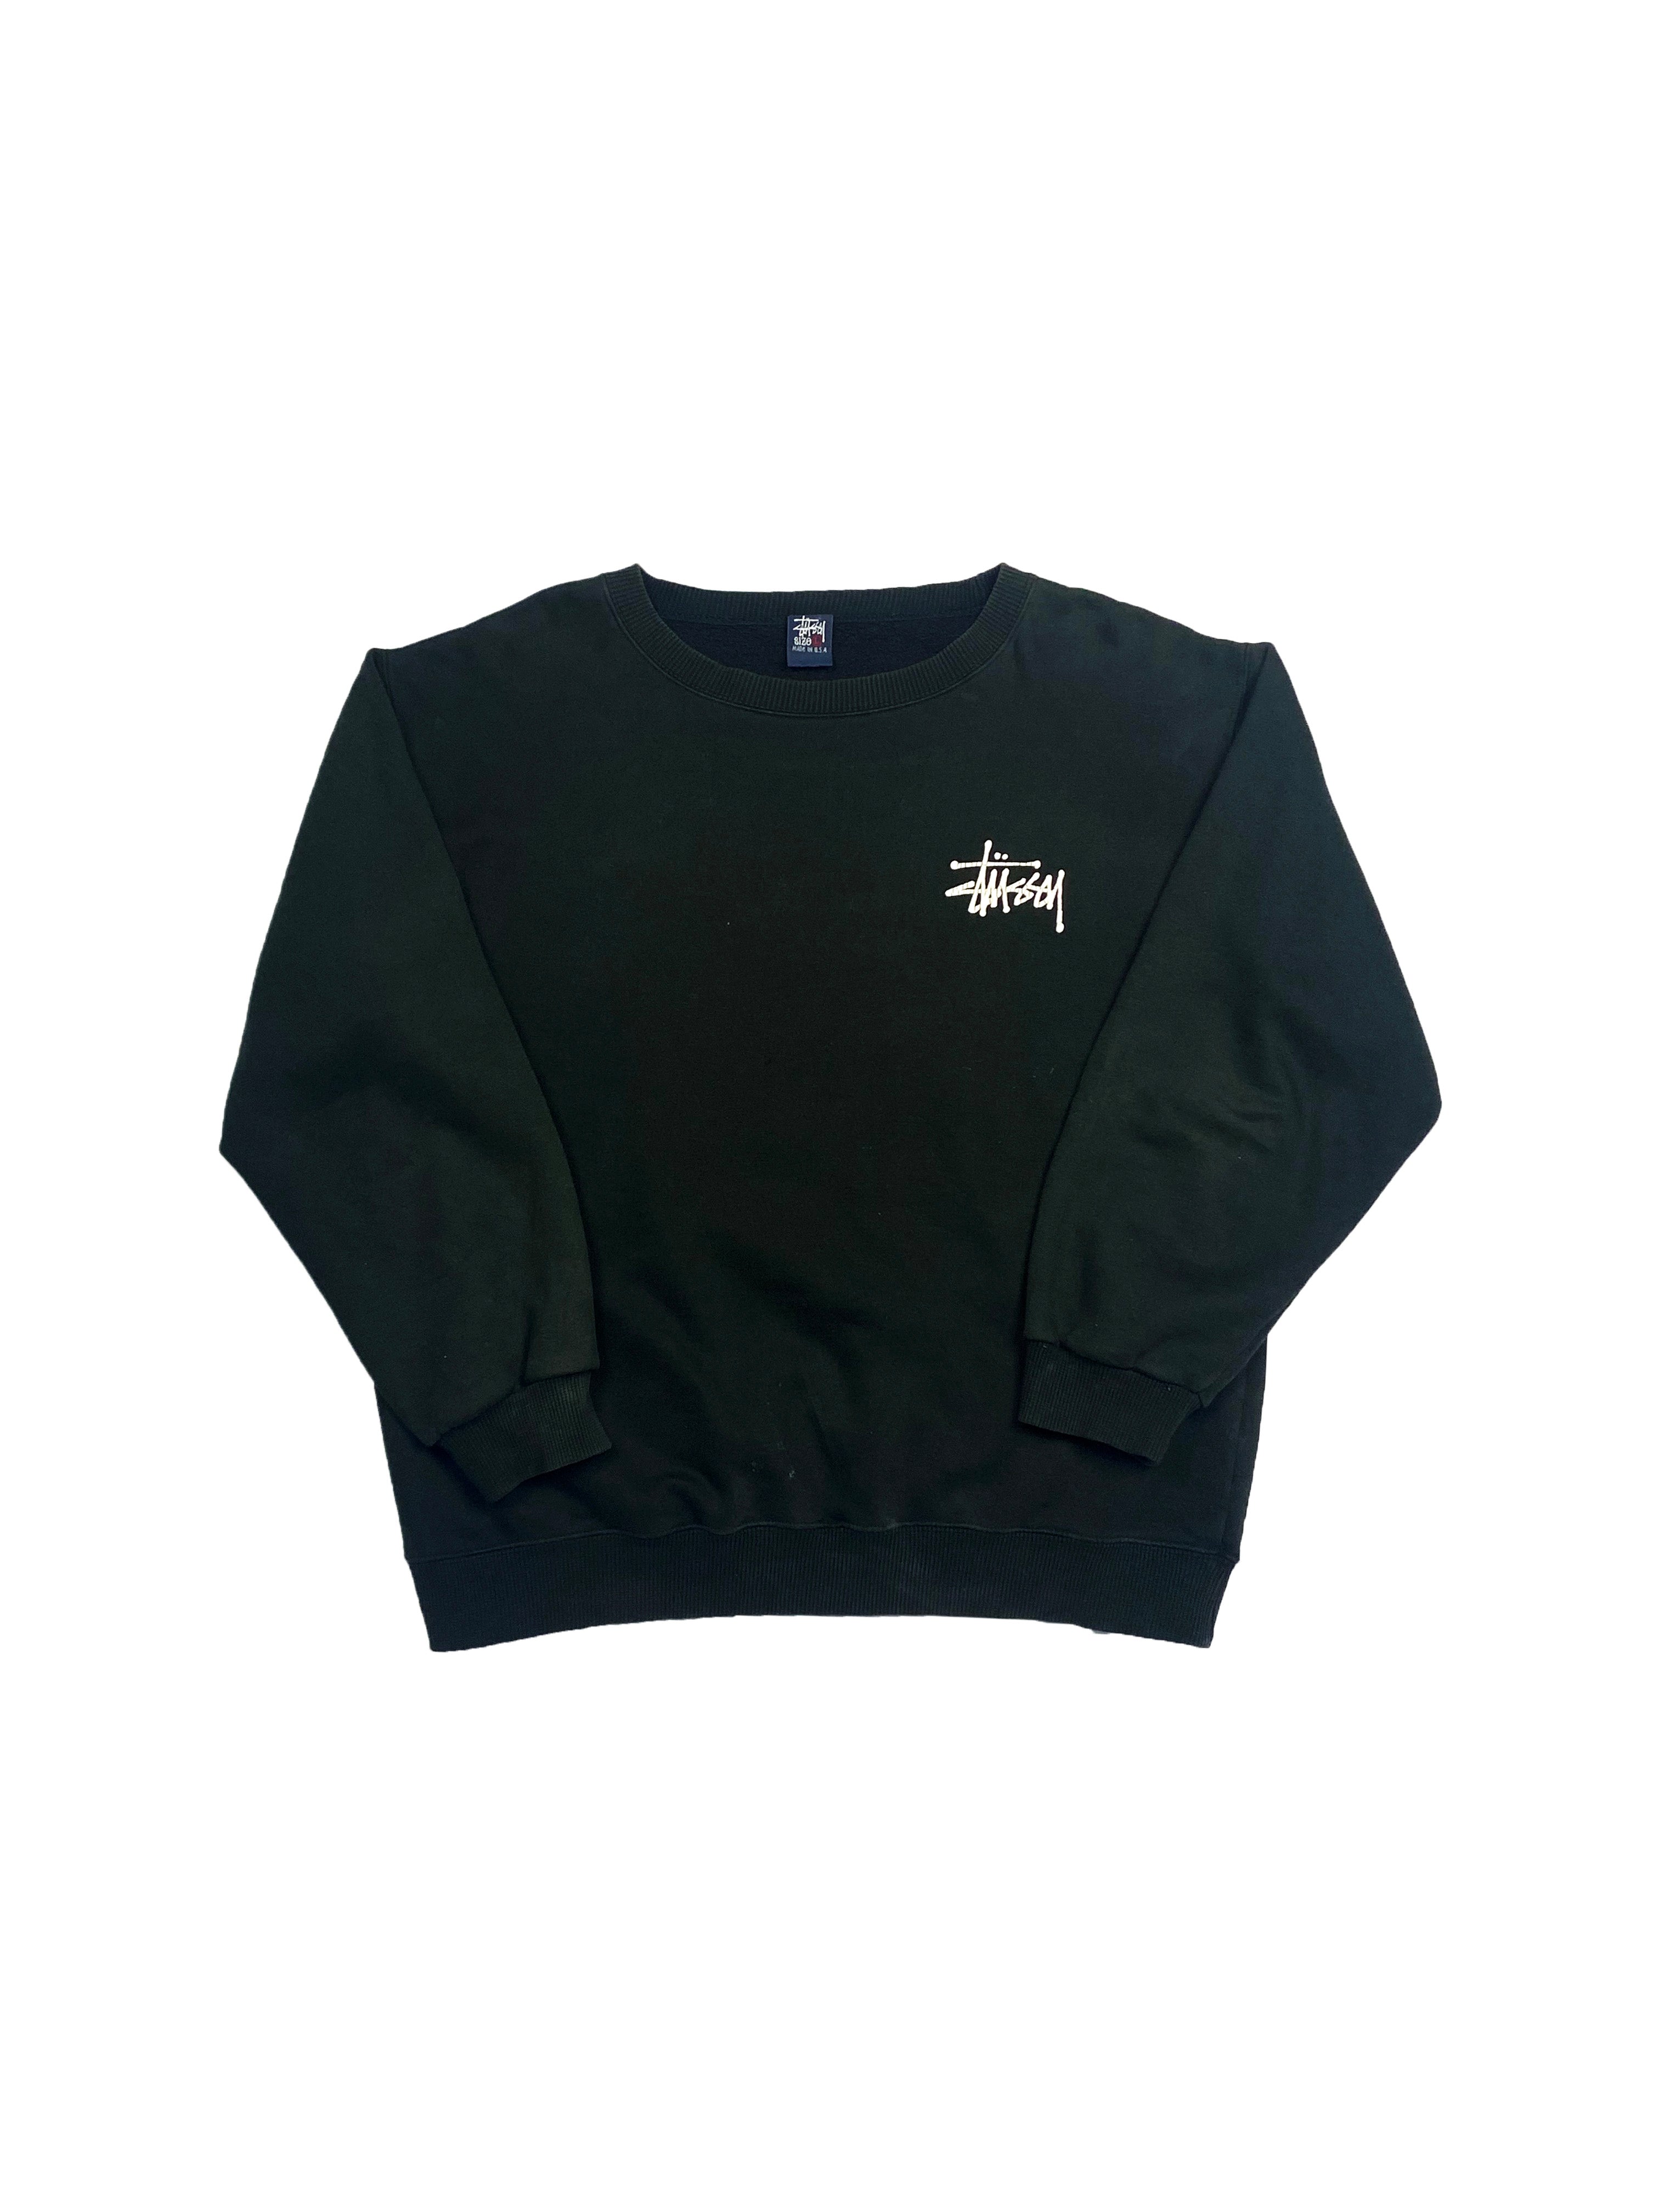 Stussy Black Dragon Sweatshirt 90's